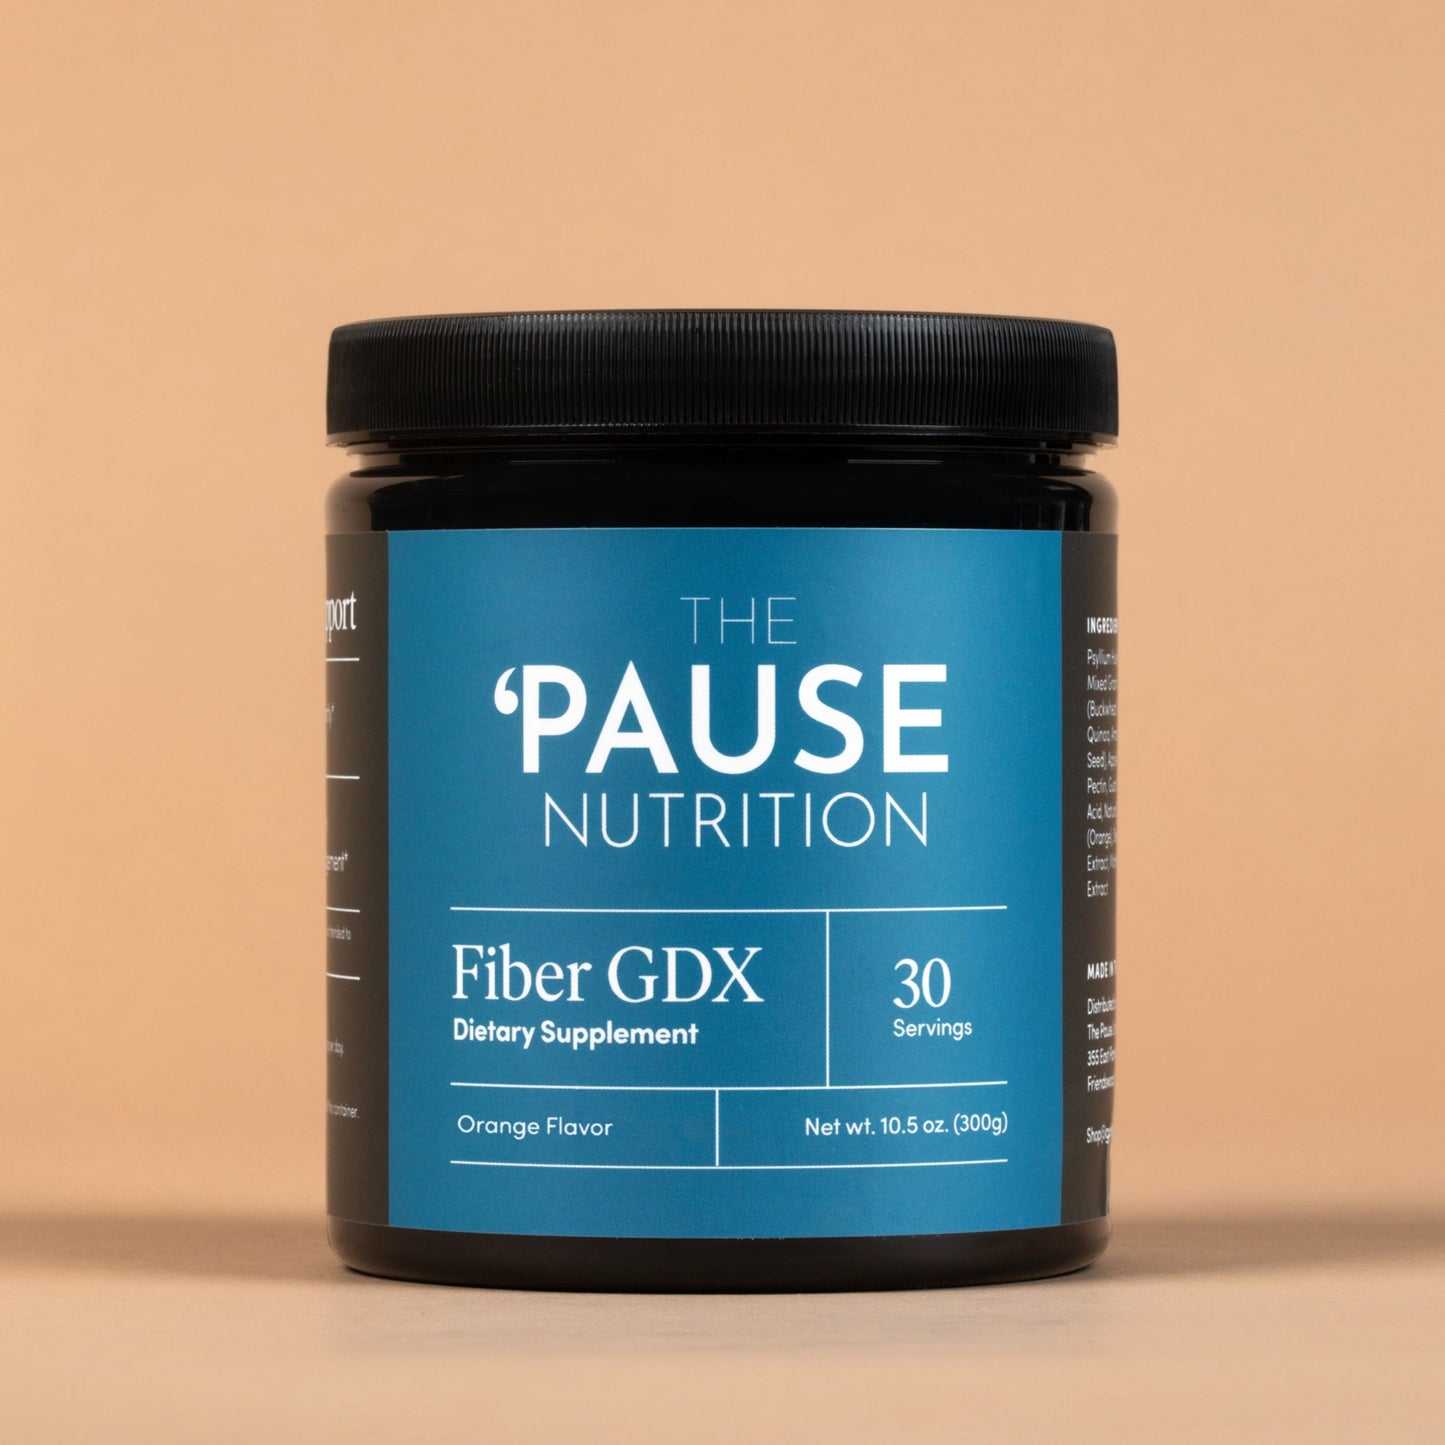 Fiber GDX - The 'Pause Nutrition